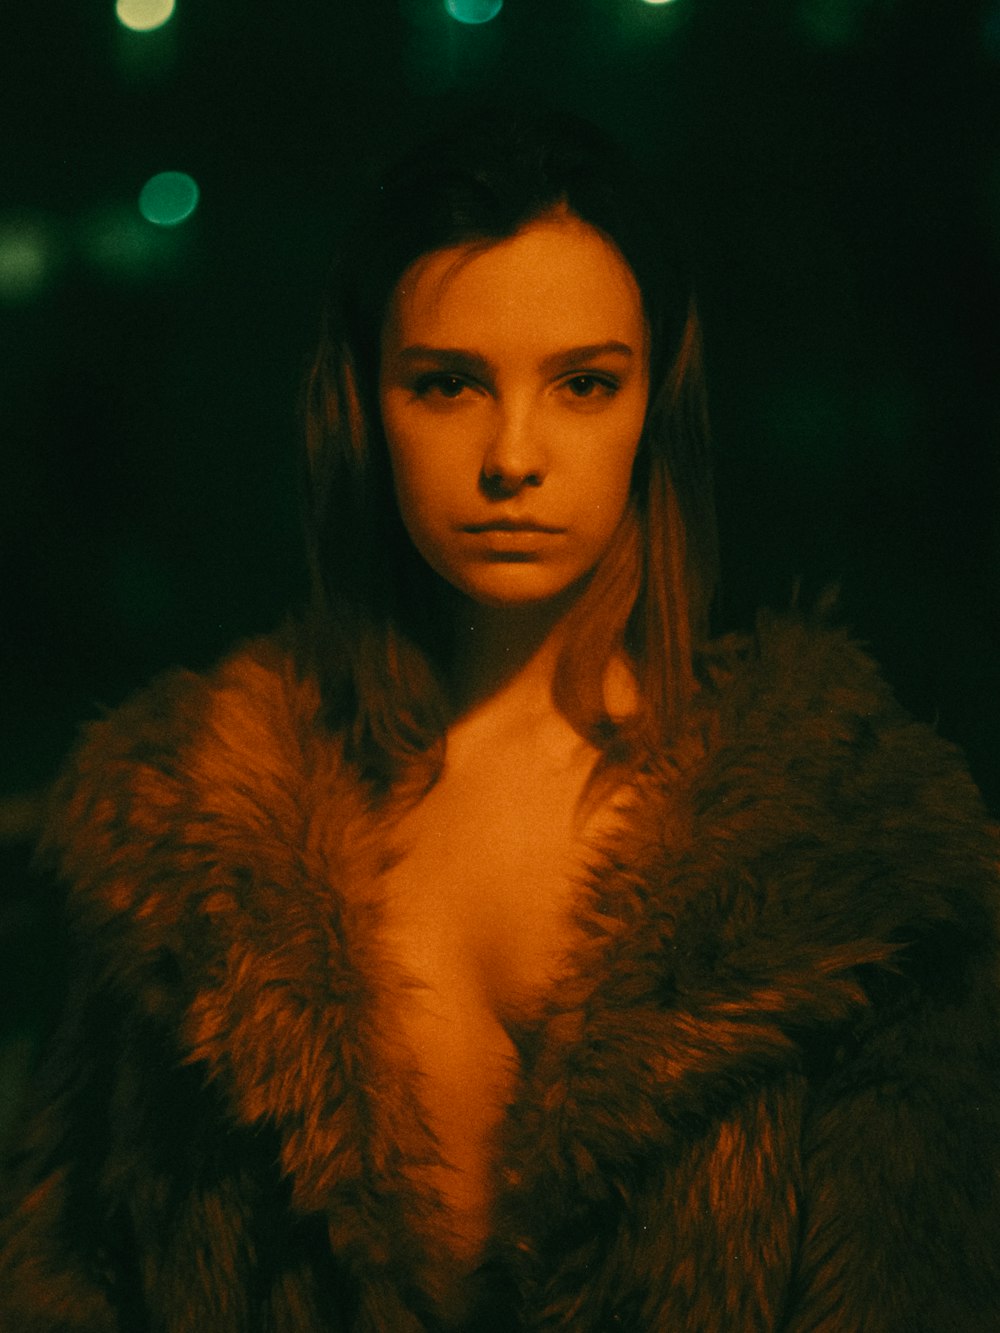 a woman wearing a fur coat in a dark room